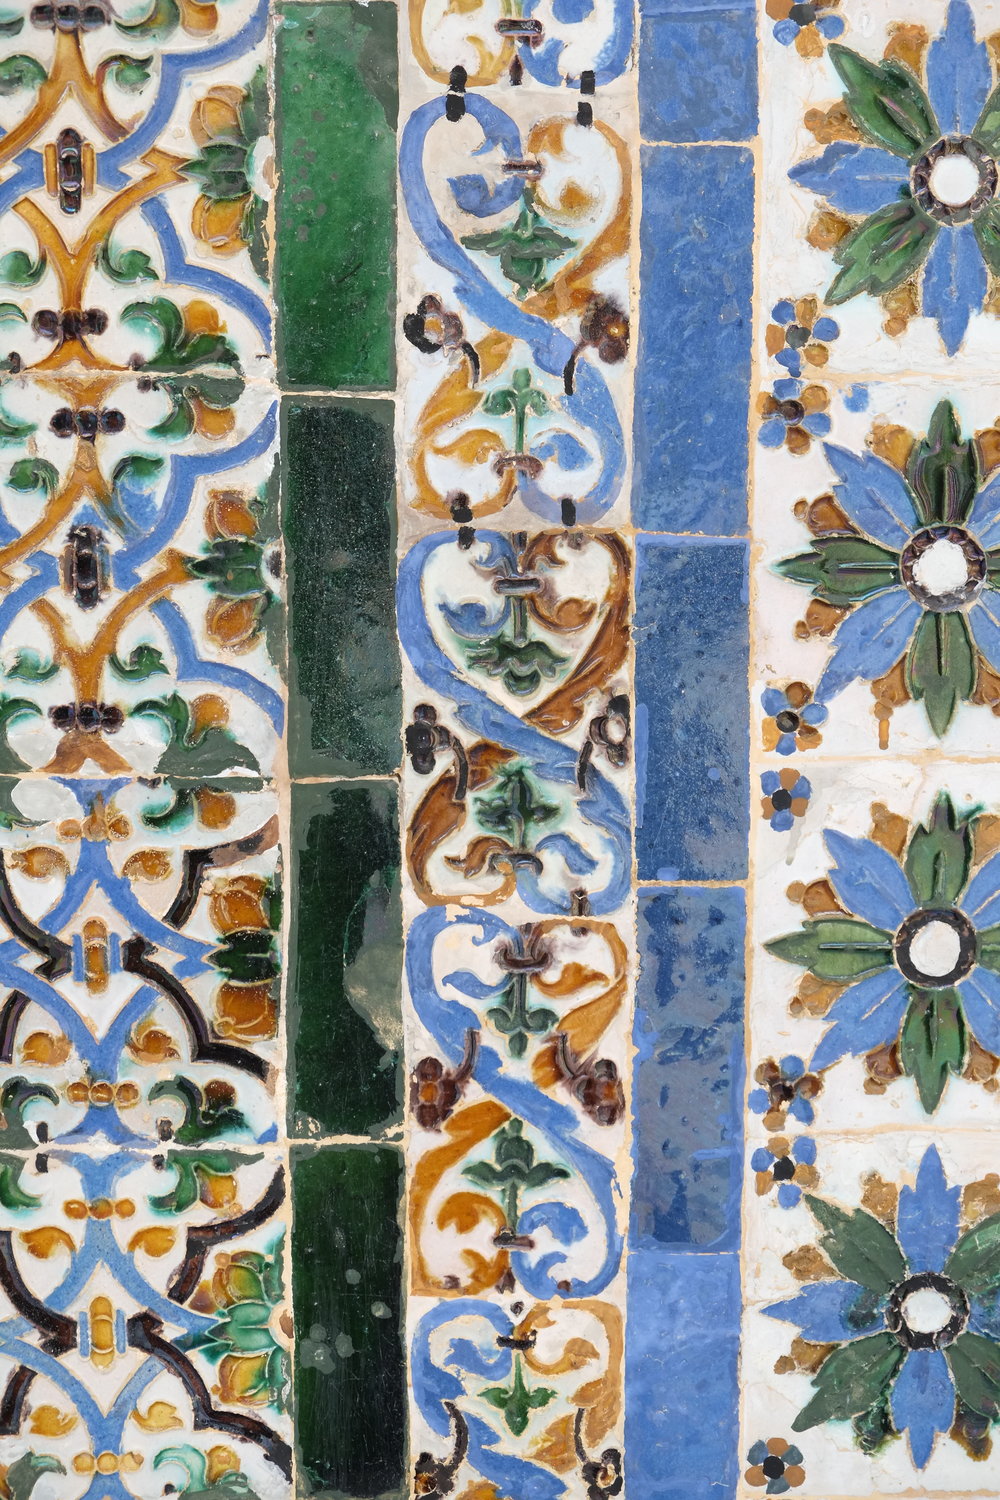 Tiles from the Casa de Pilatos